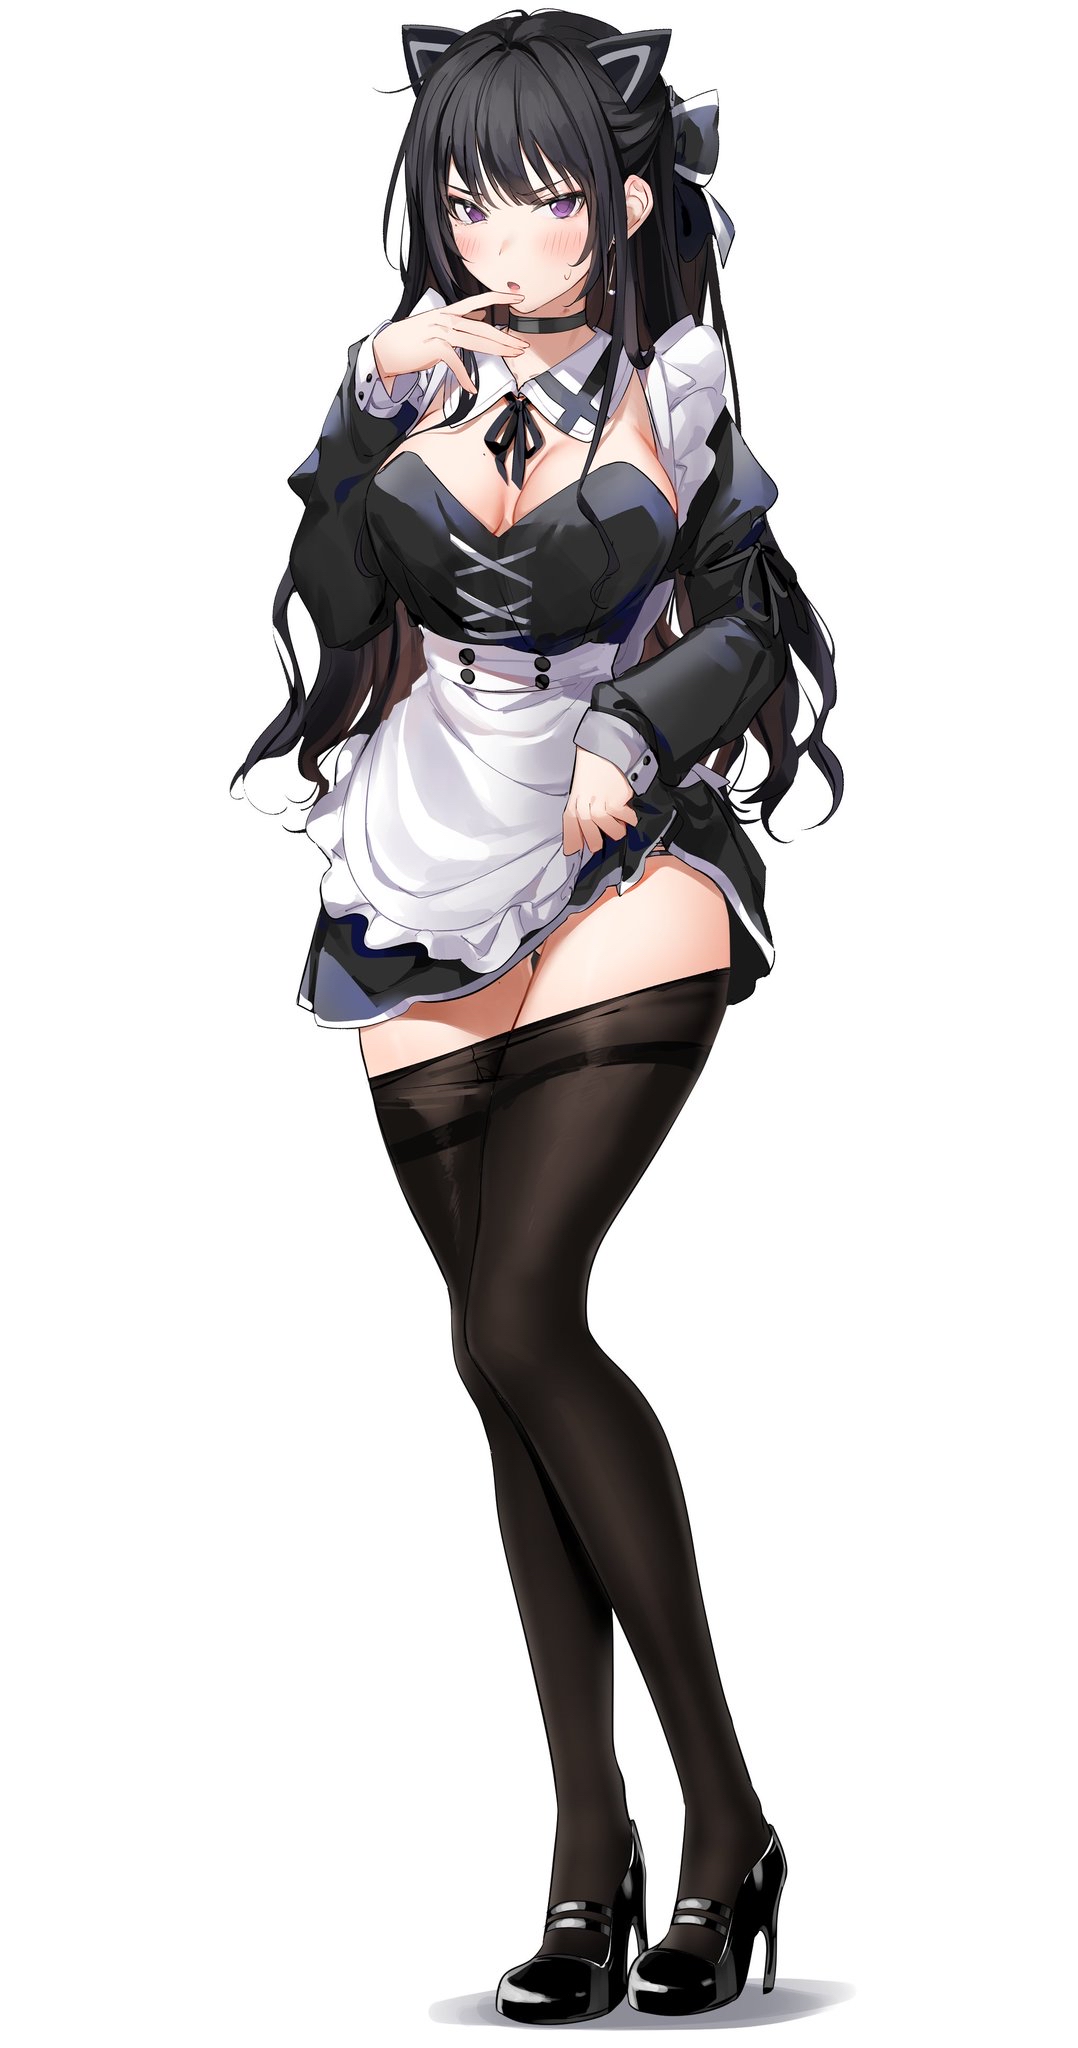 Anime 1078x2048 anime girls Xretakex maid outfit pantyhose lifting skirt cleavage animal ears cat ears dark hair purple eyes